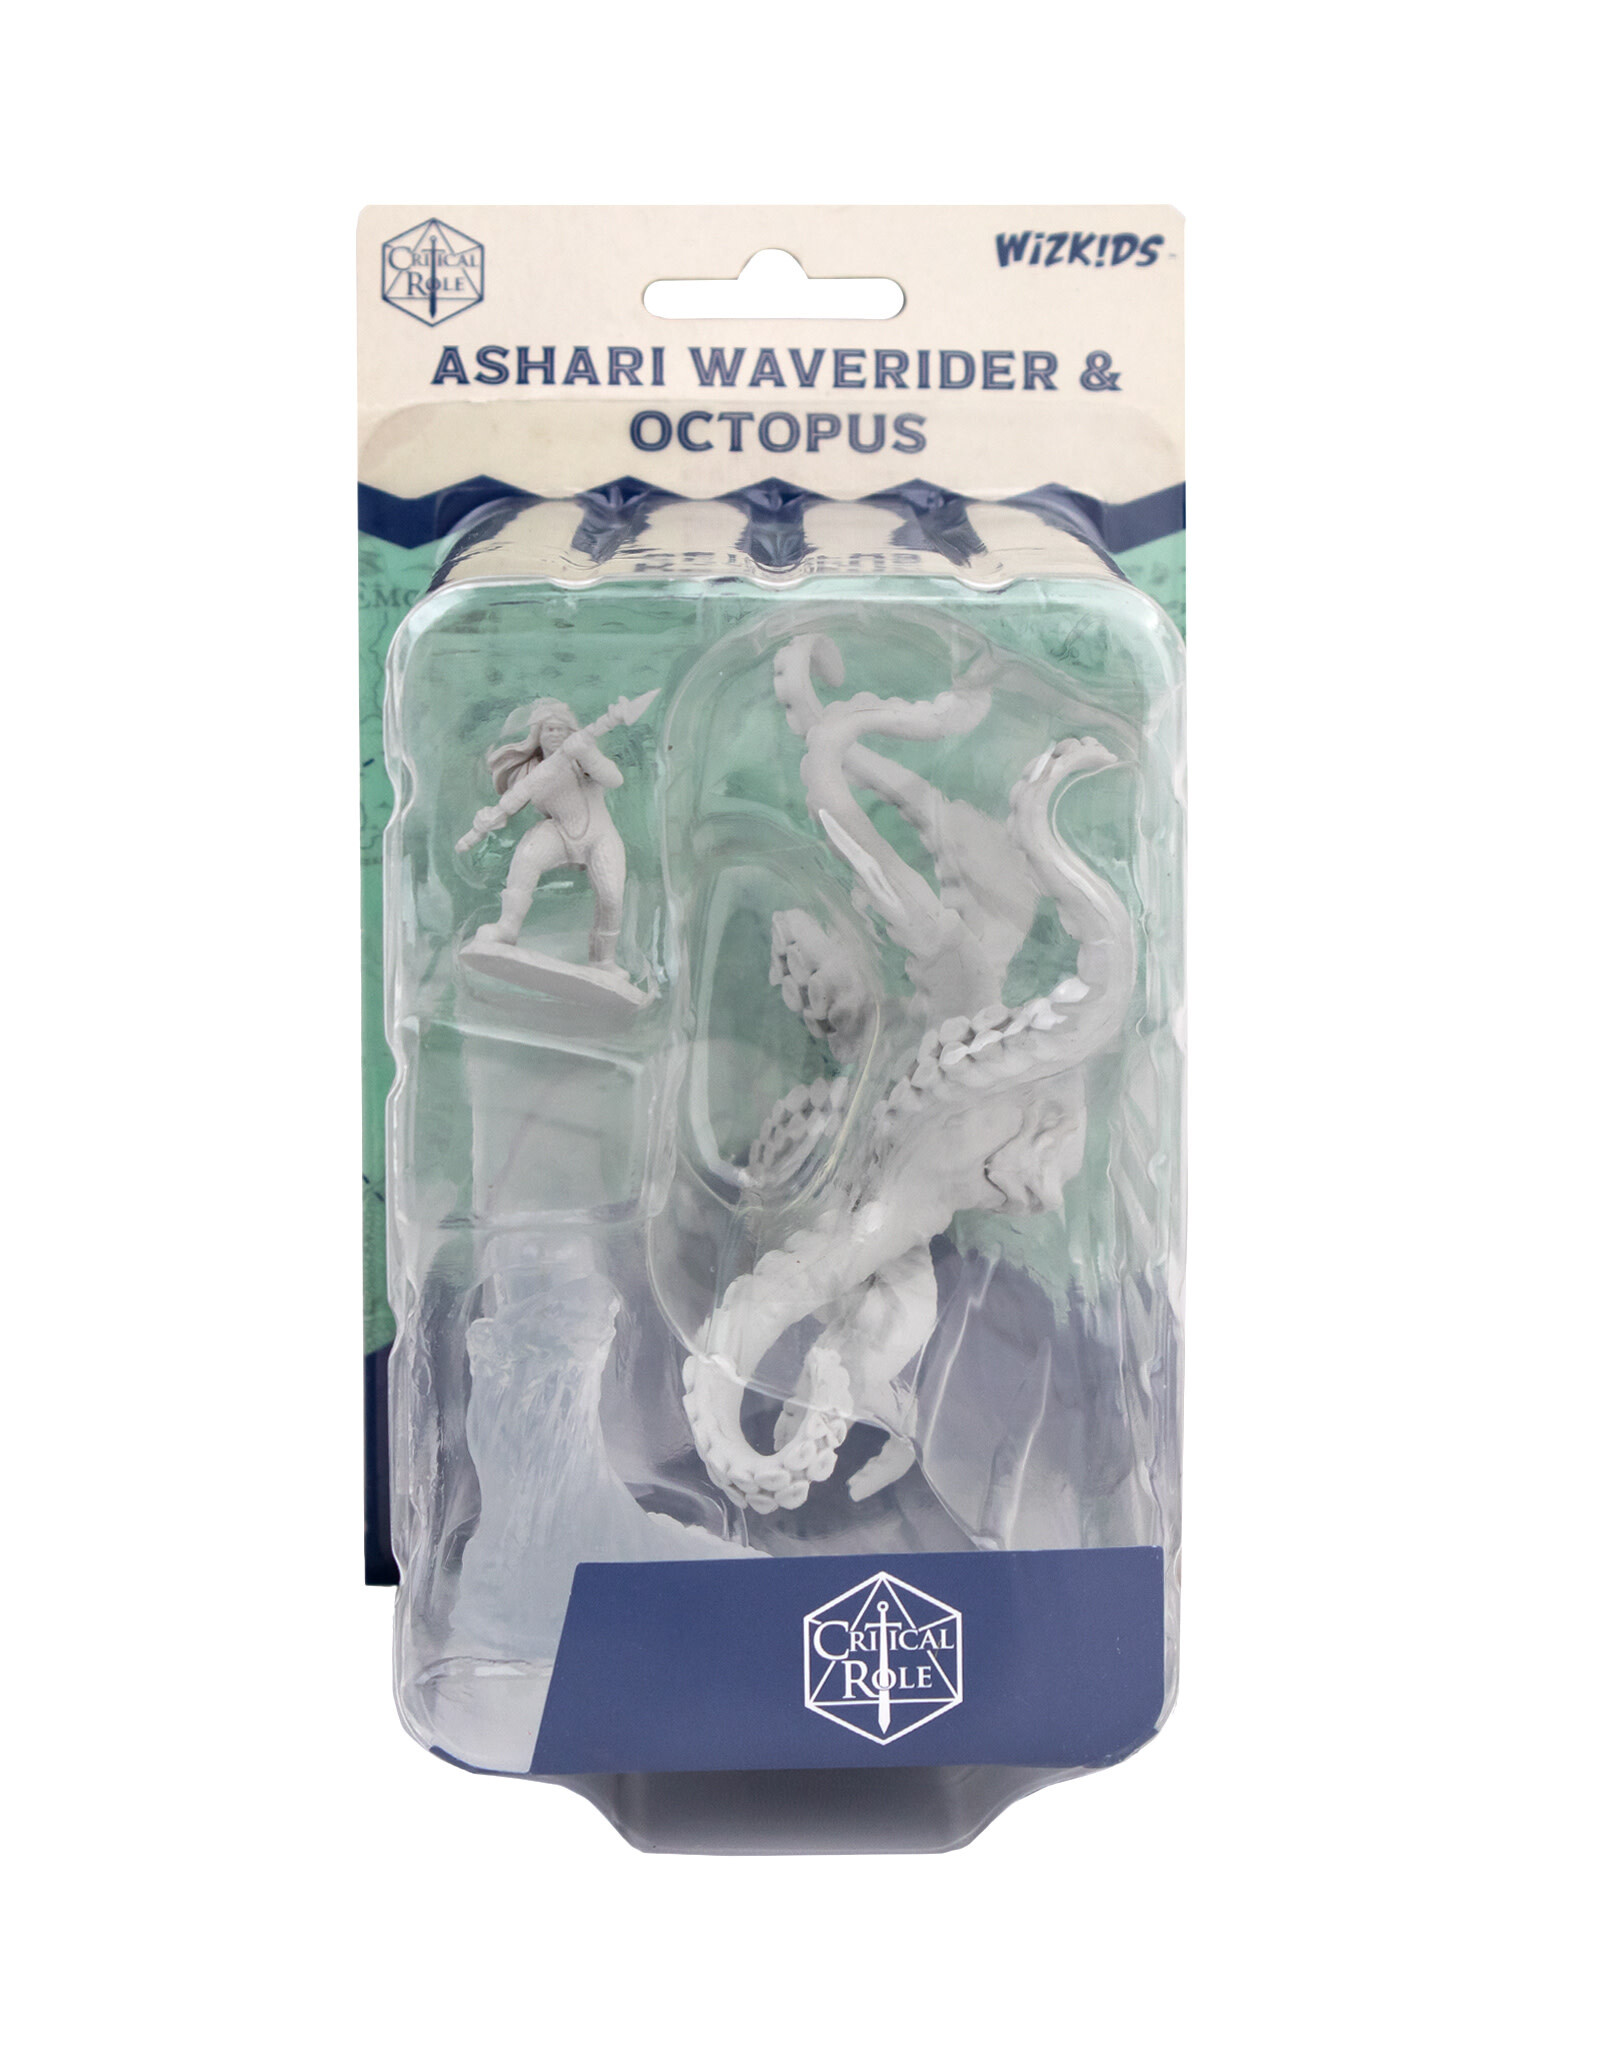 Critical Role Unpainted Miniatures: W02 Ashari Waverider & Octopus